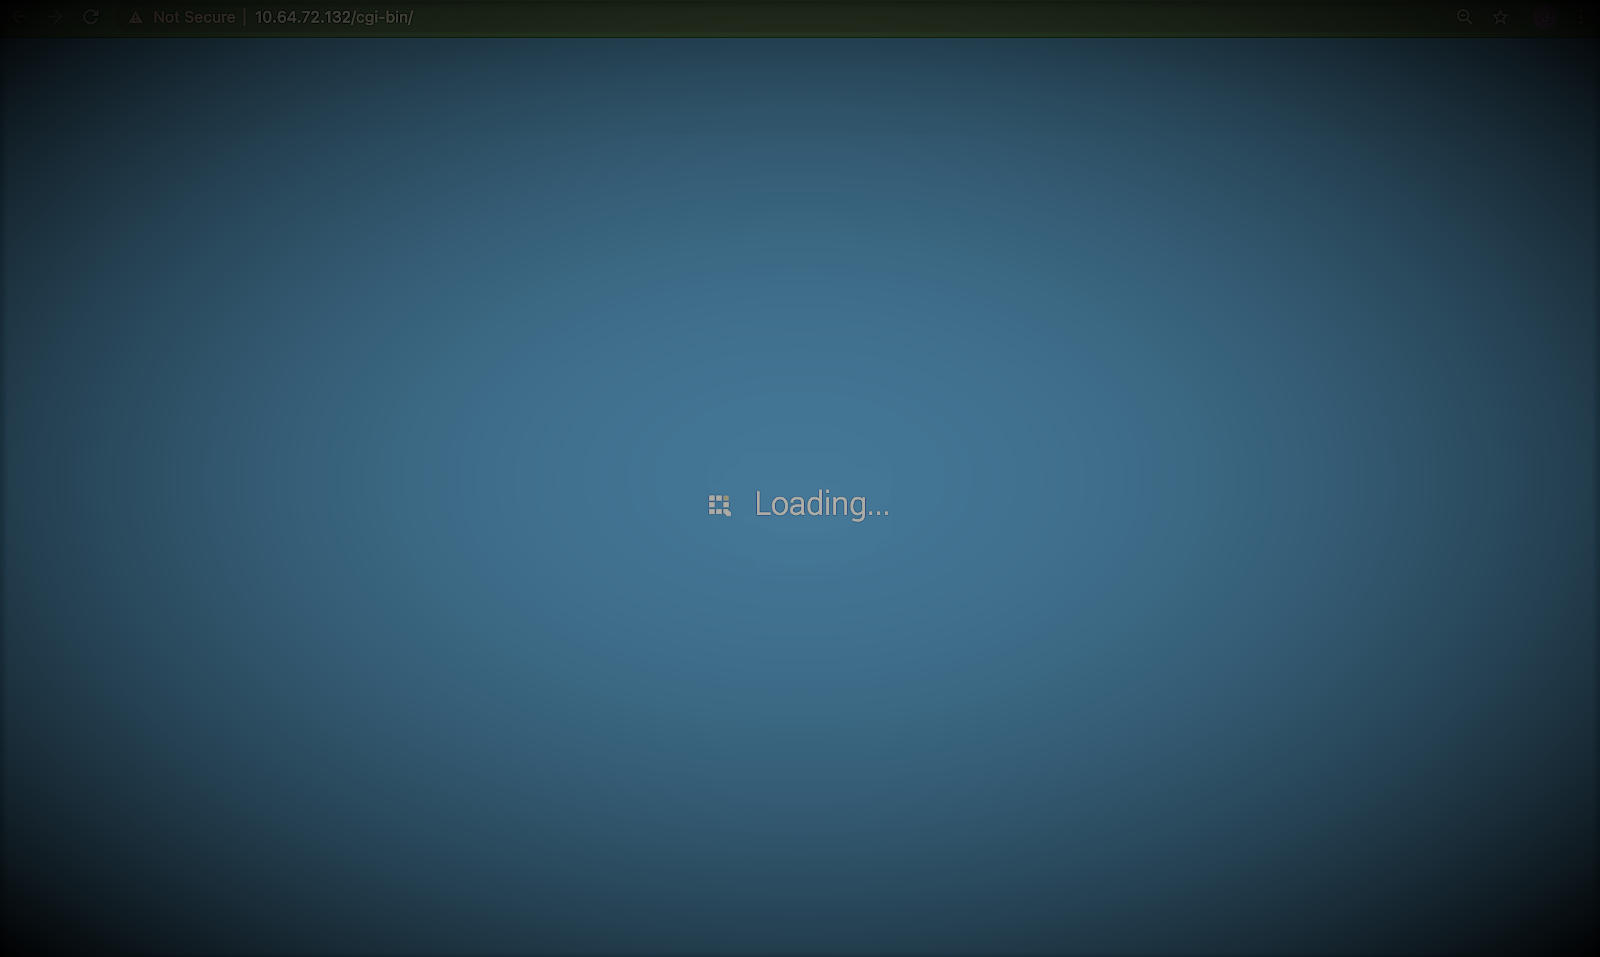 Endless waiting in loading following login